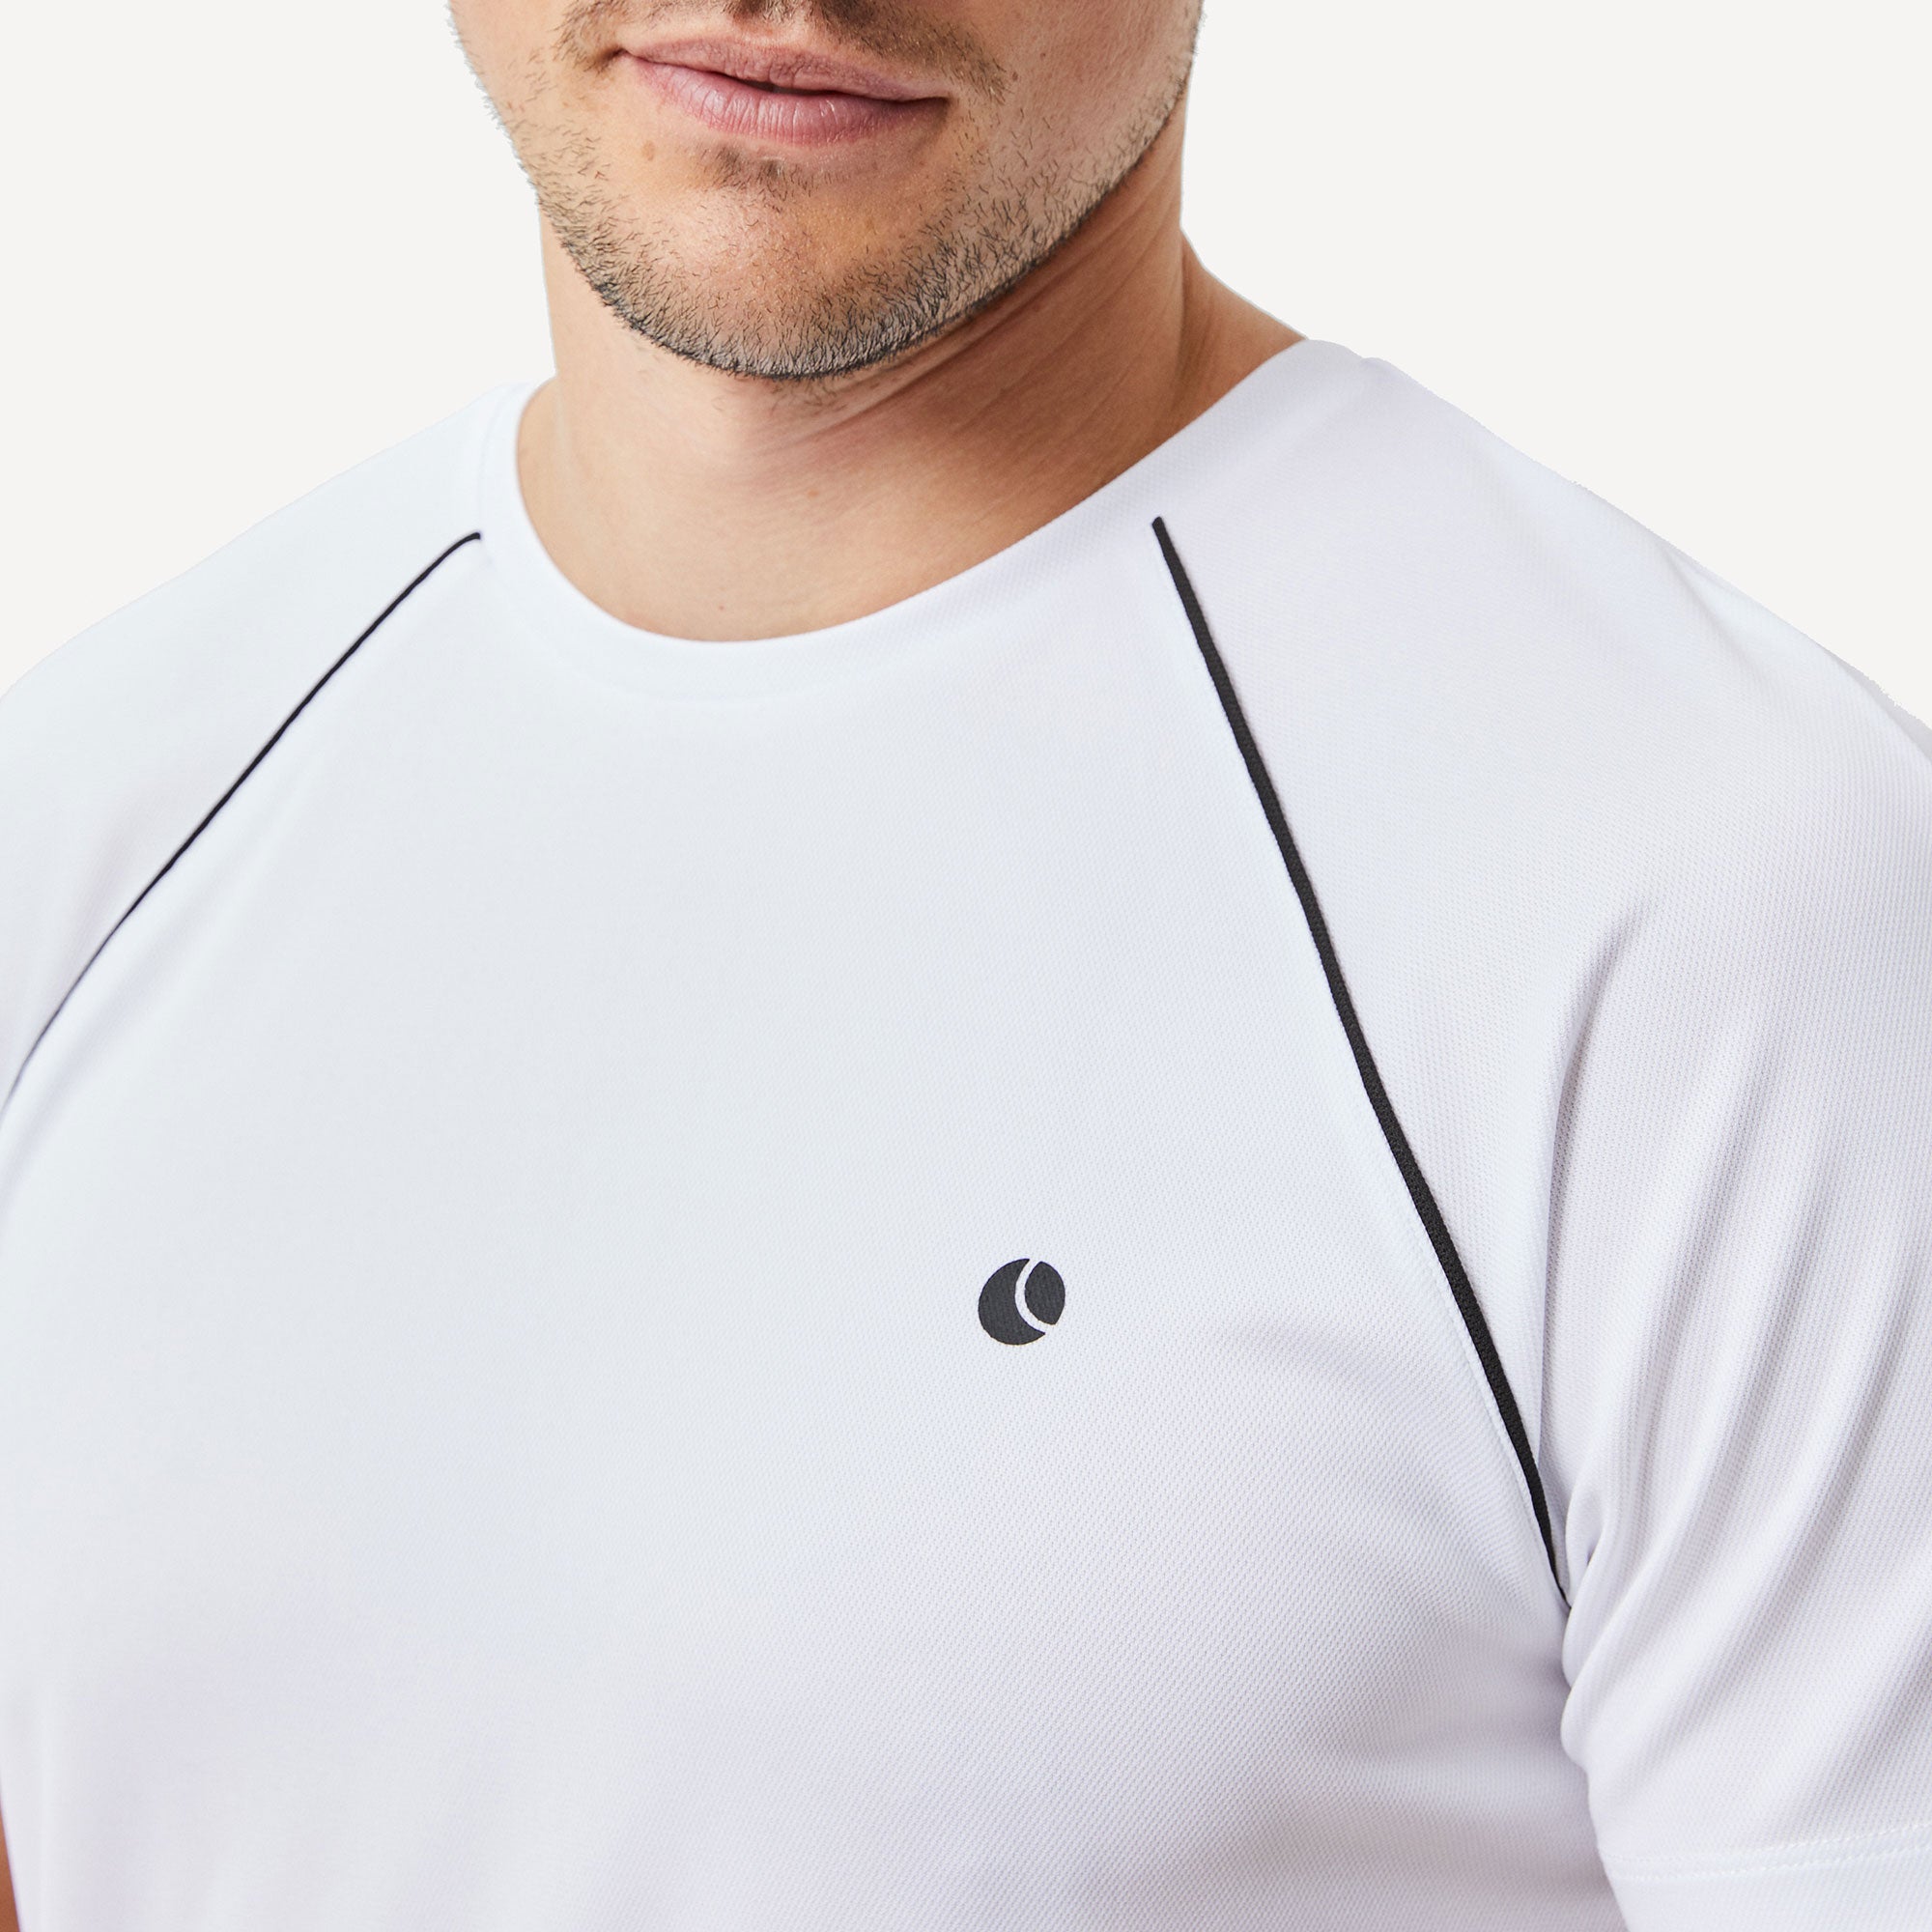 Björn Borg Ace Racquet Men's Tennis Shirt - White (3)